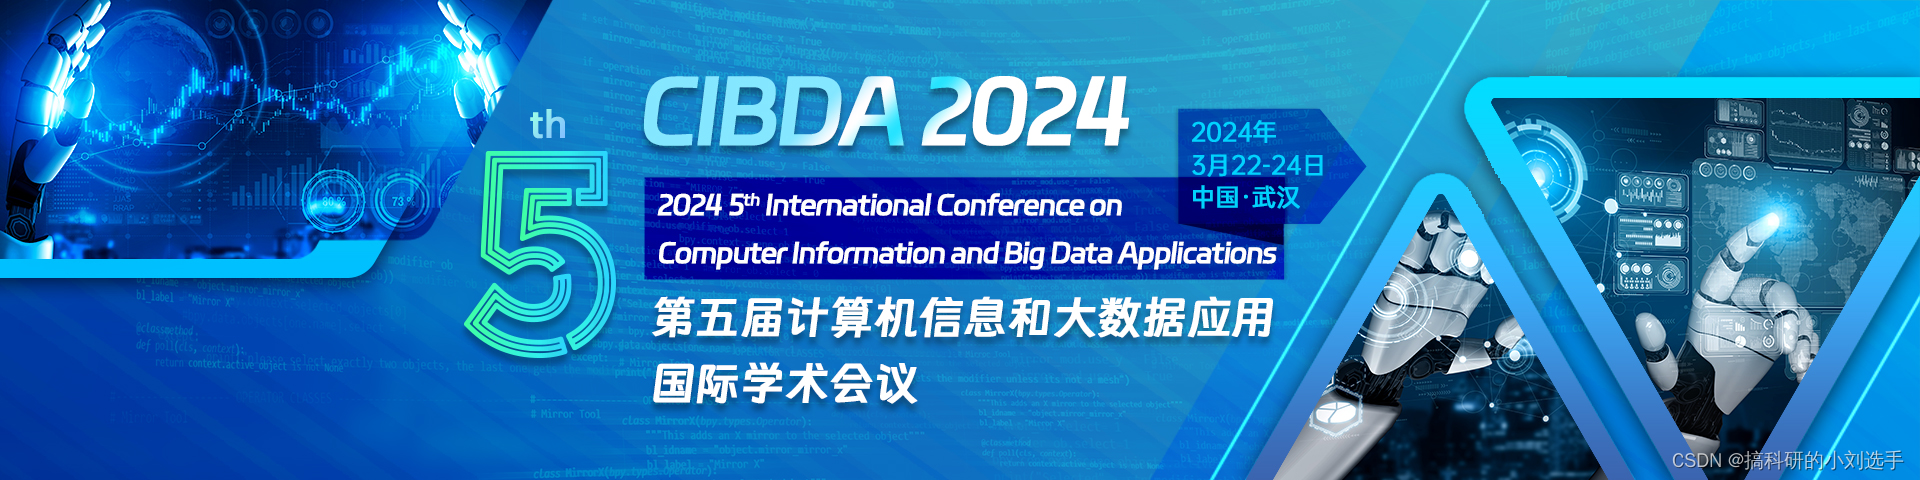 【EI会议征稿通知】第五届计算机信息和大数据应用国际学术会议（CIBDA 2024）